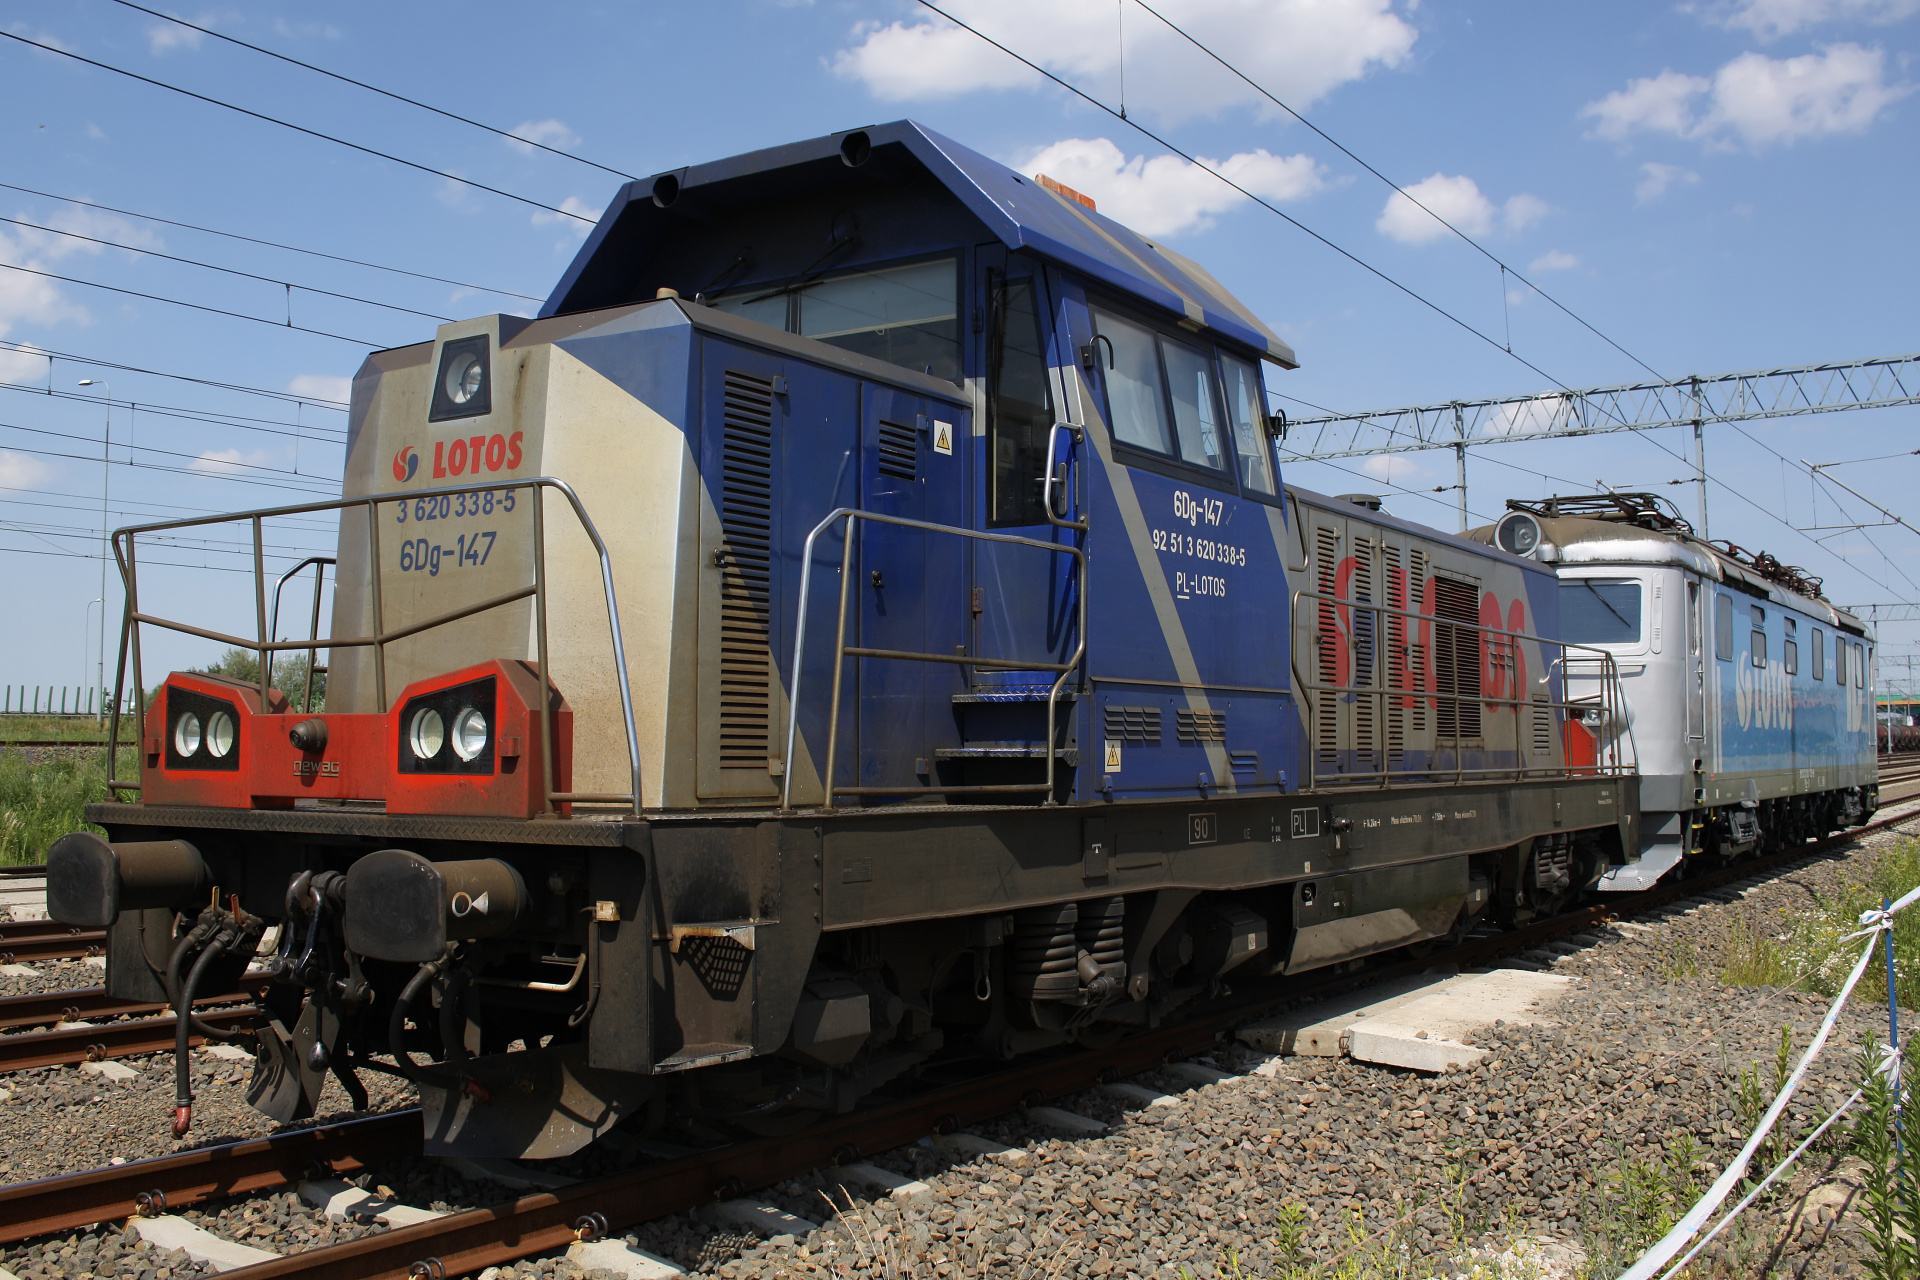 Newag 6Dg-147 (Vehicles » Trains and Locomotives)